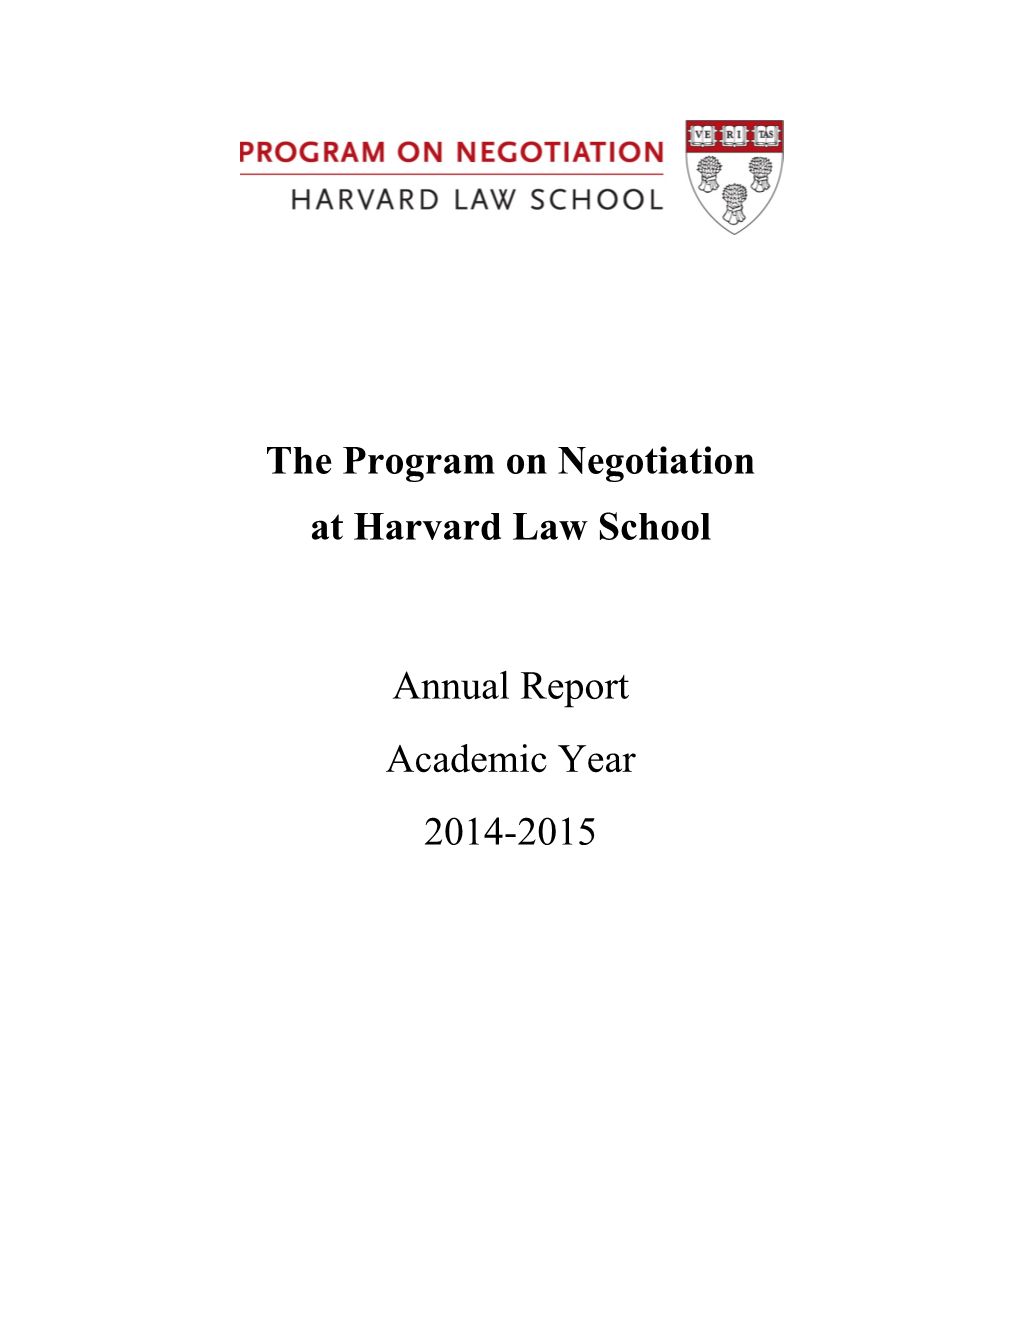 The Program on Negotiation at Harvard Law School Annual Report